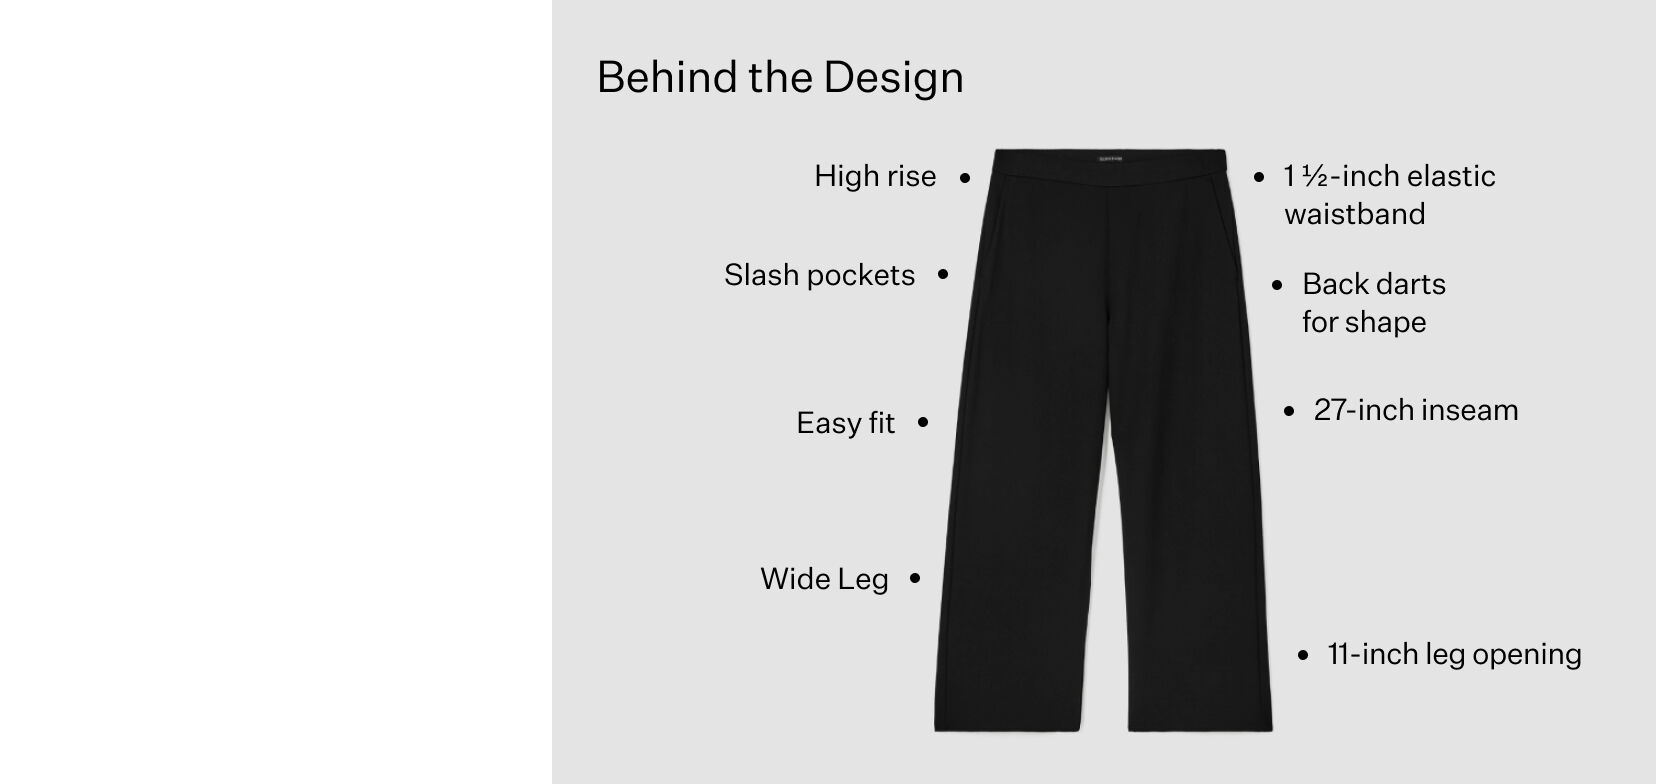 Wide-Leg Ankle Pant design details